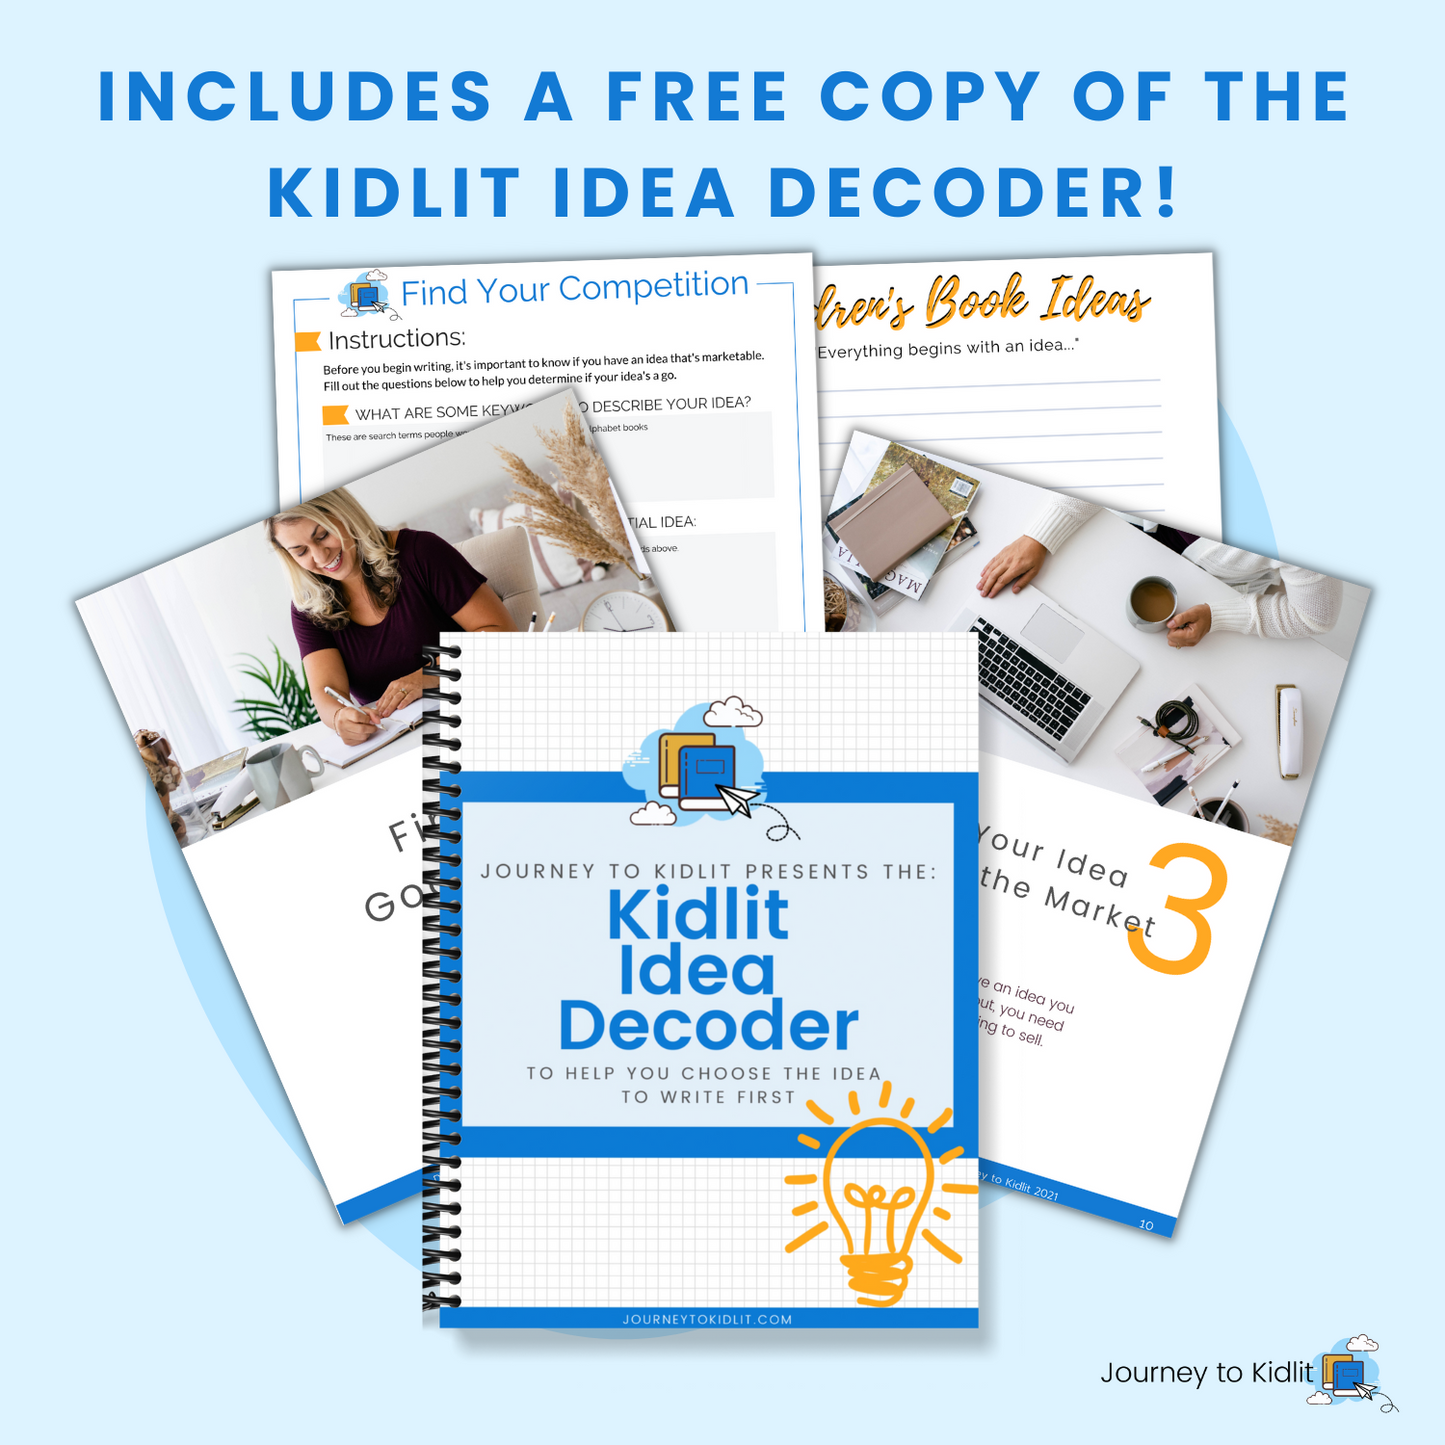 Kidlit Idea Creator - how to find a good children's book idea